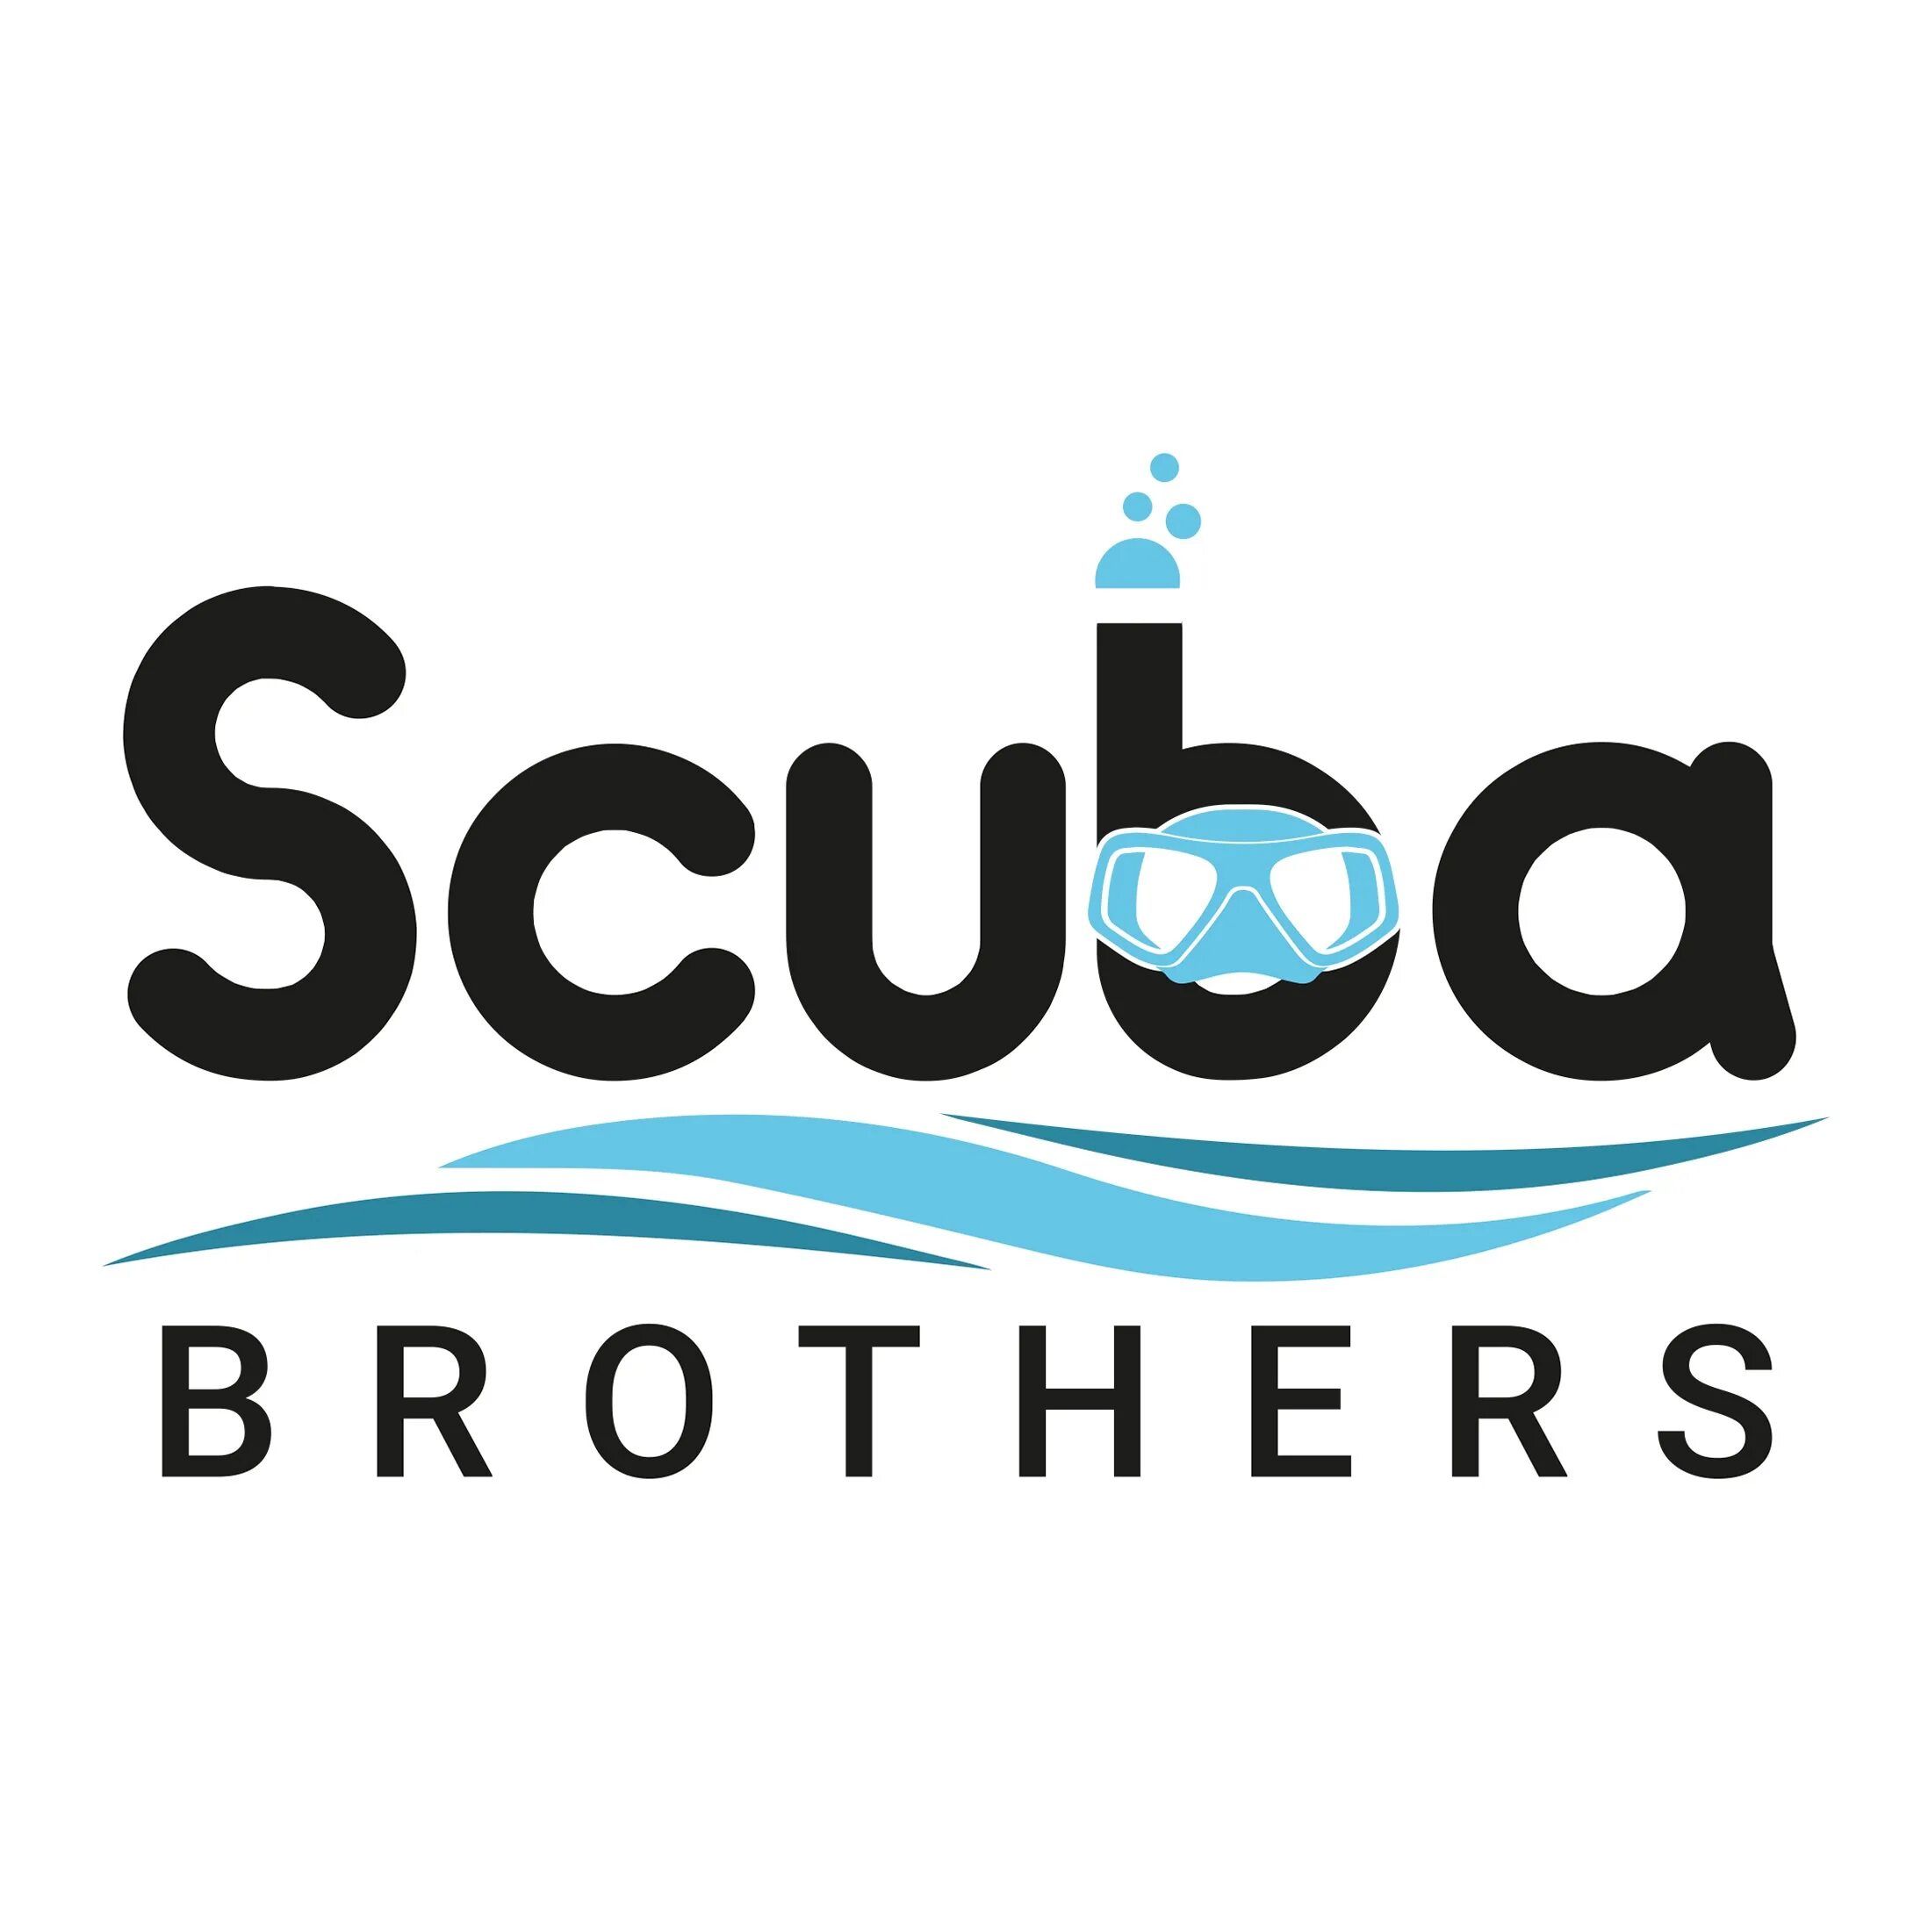 Scuba brothers. Флажок Буя Scorpena а и b. Скуба бразерс логотип. Scuba brothers frog2.